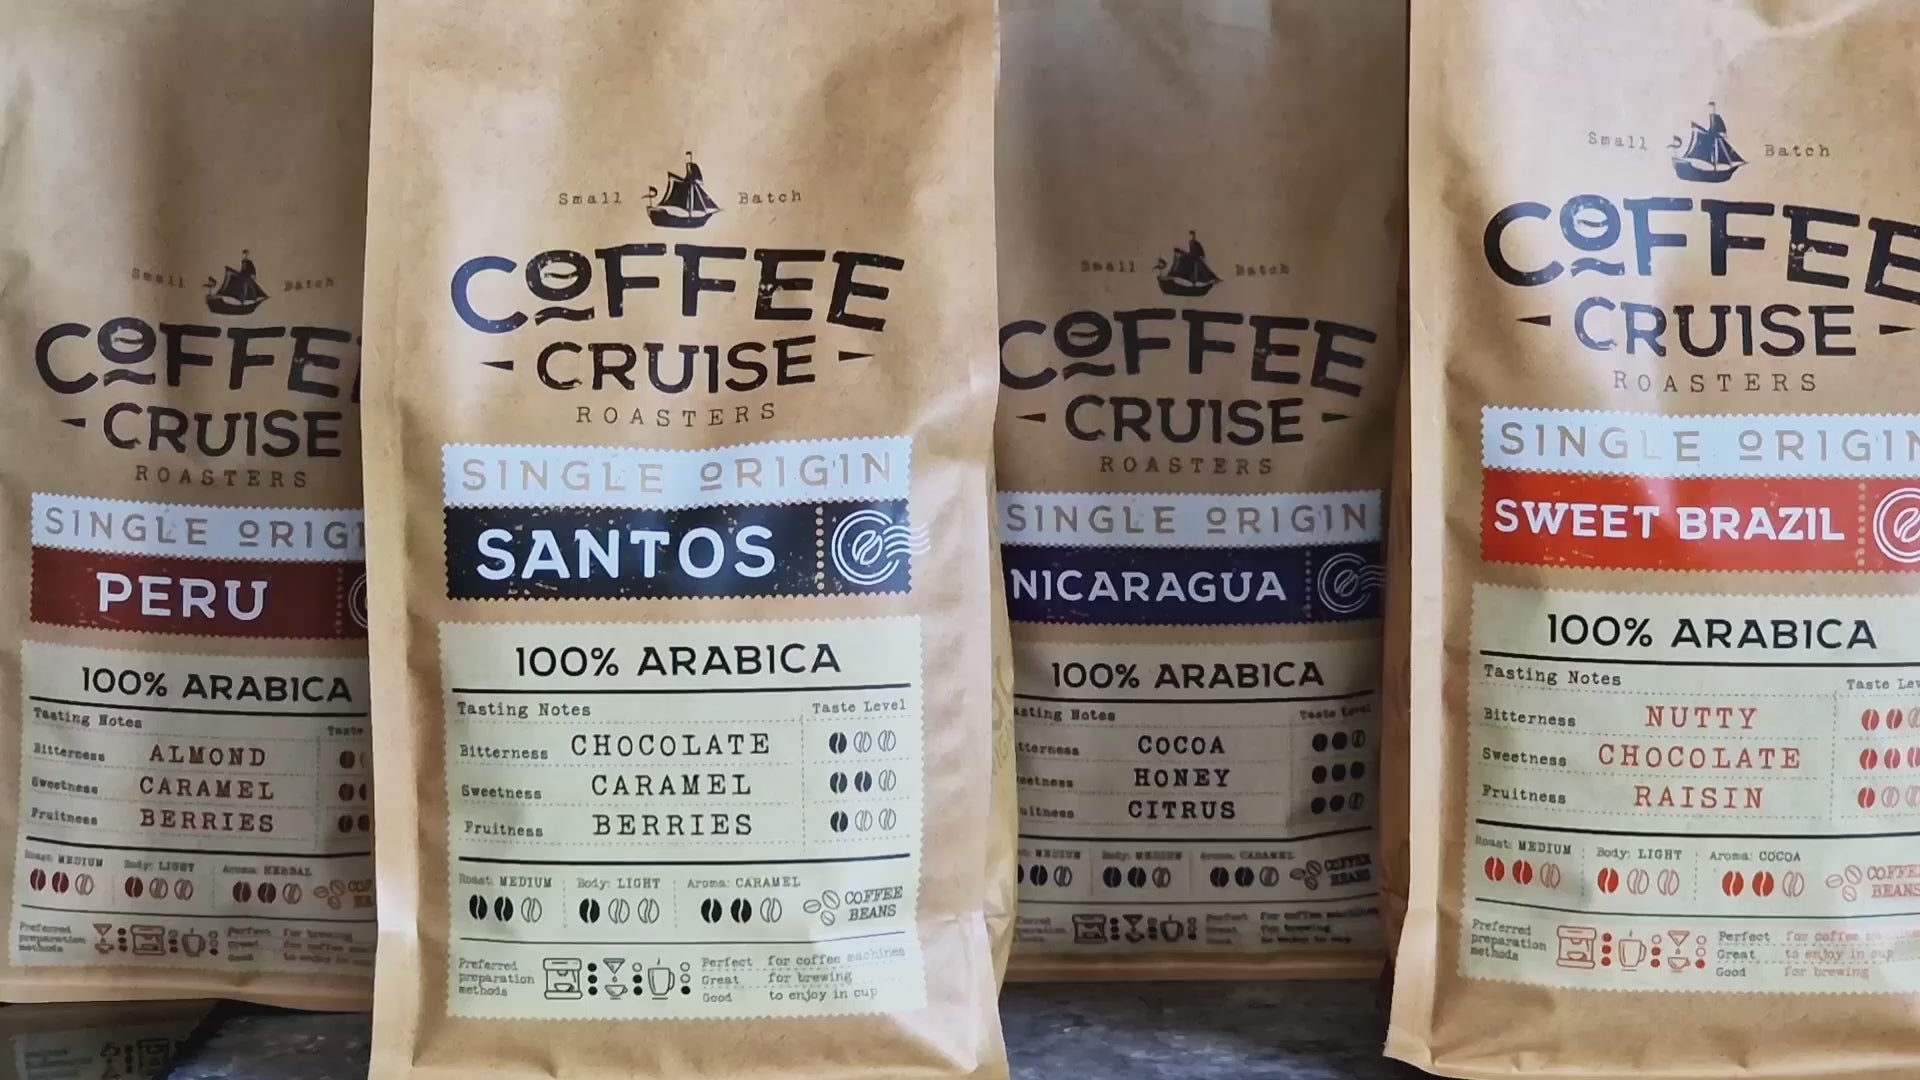 Coffee cruise Lukata video Santos, Nicaragua, Sweet Brazil, Peru